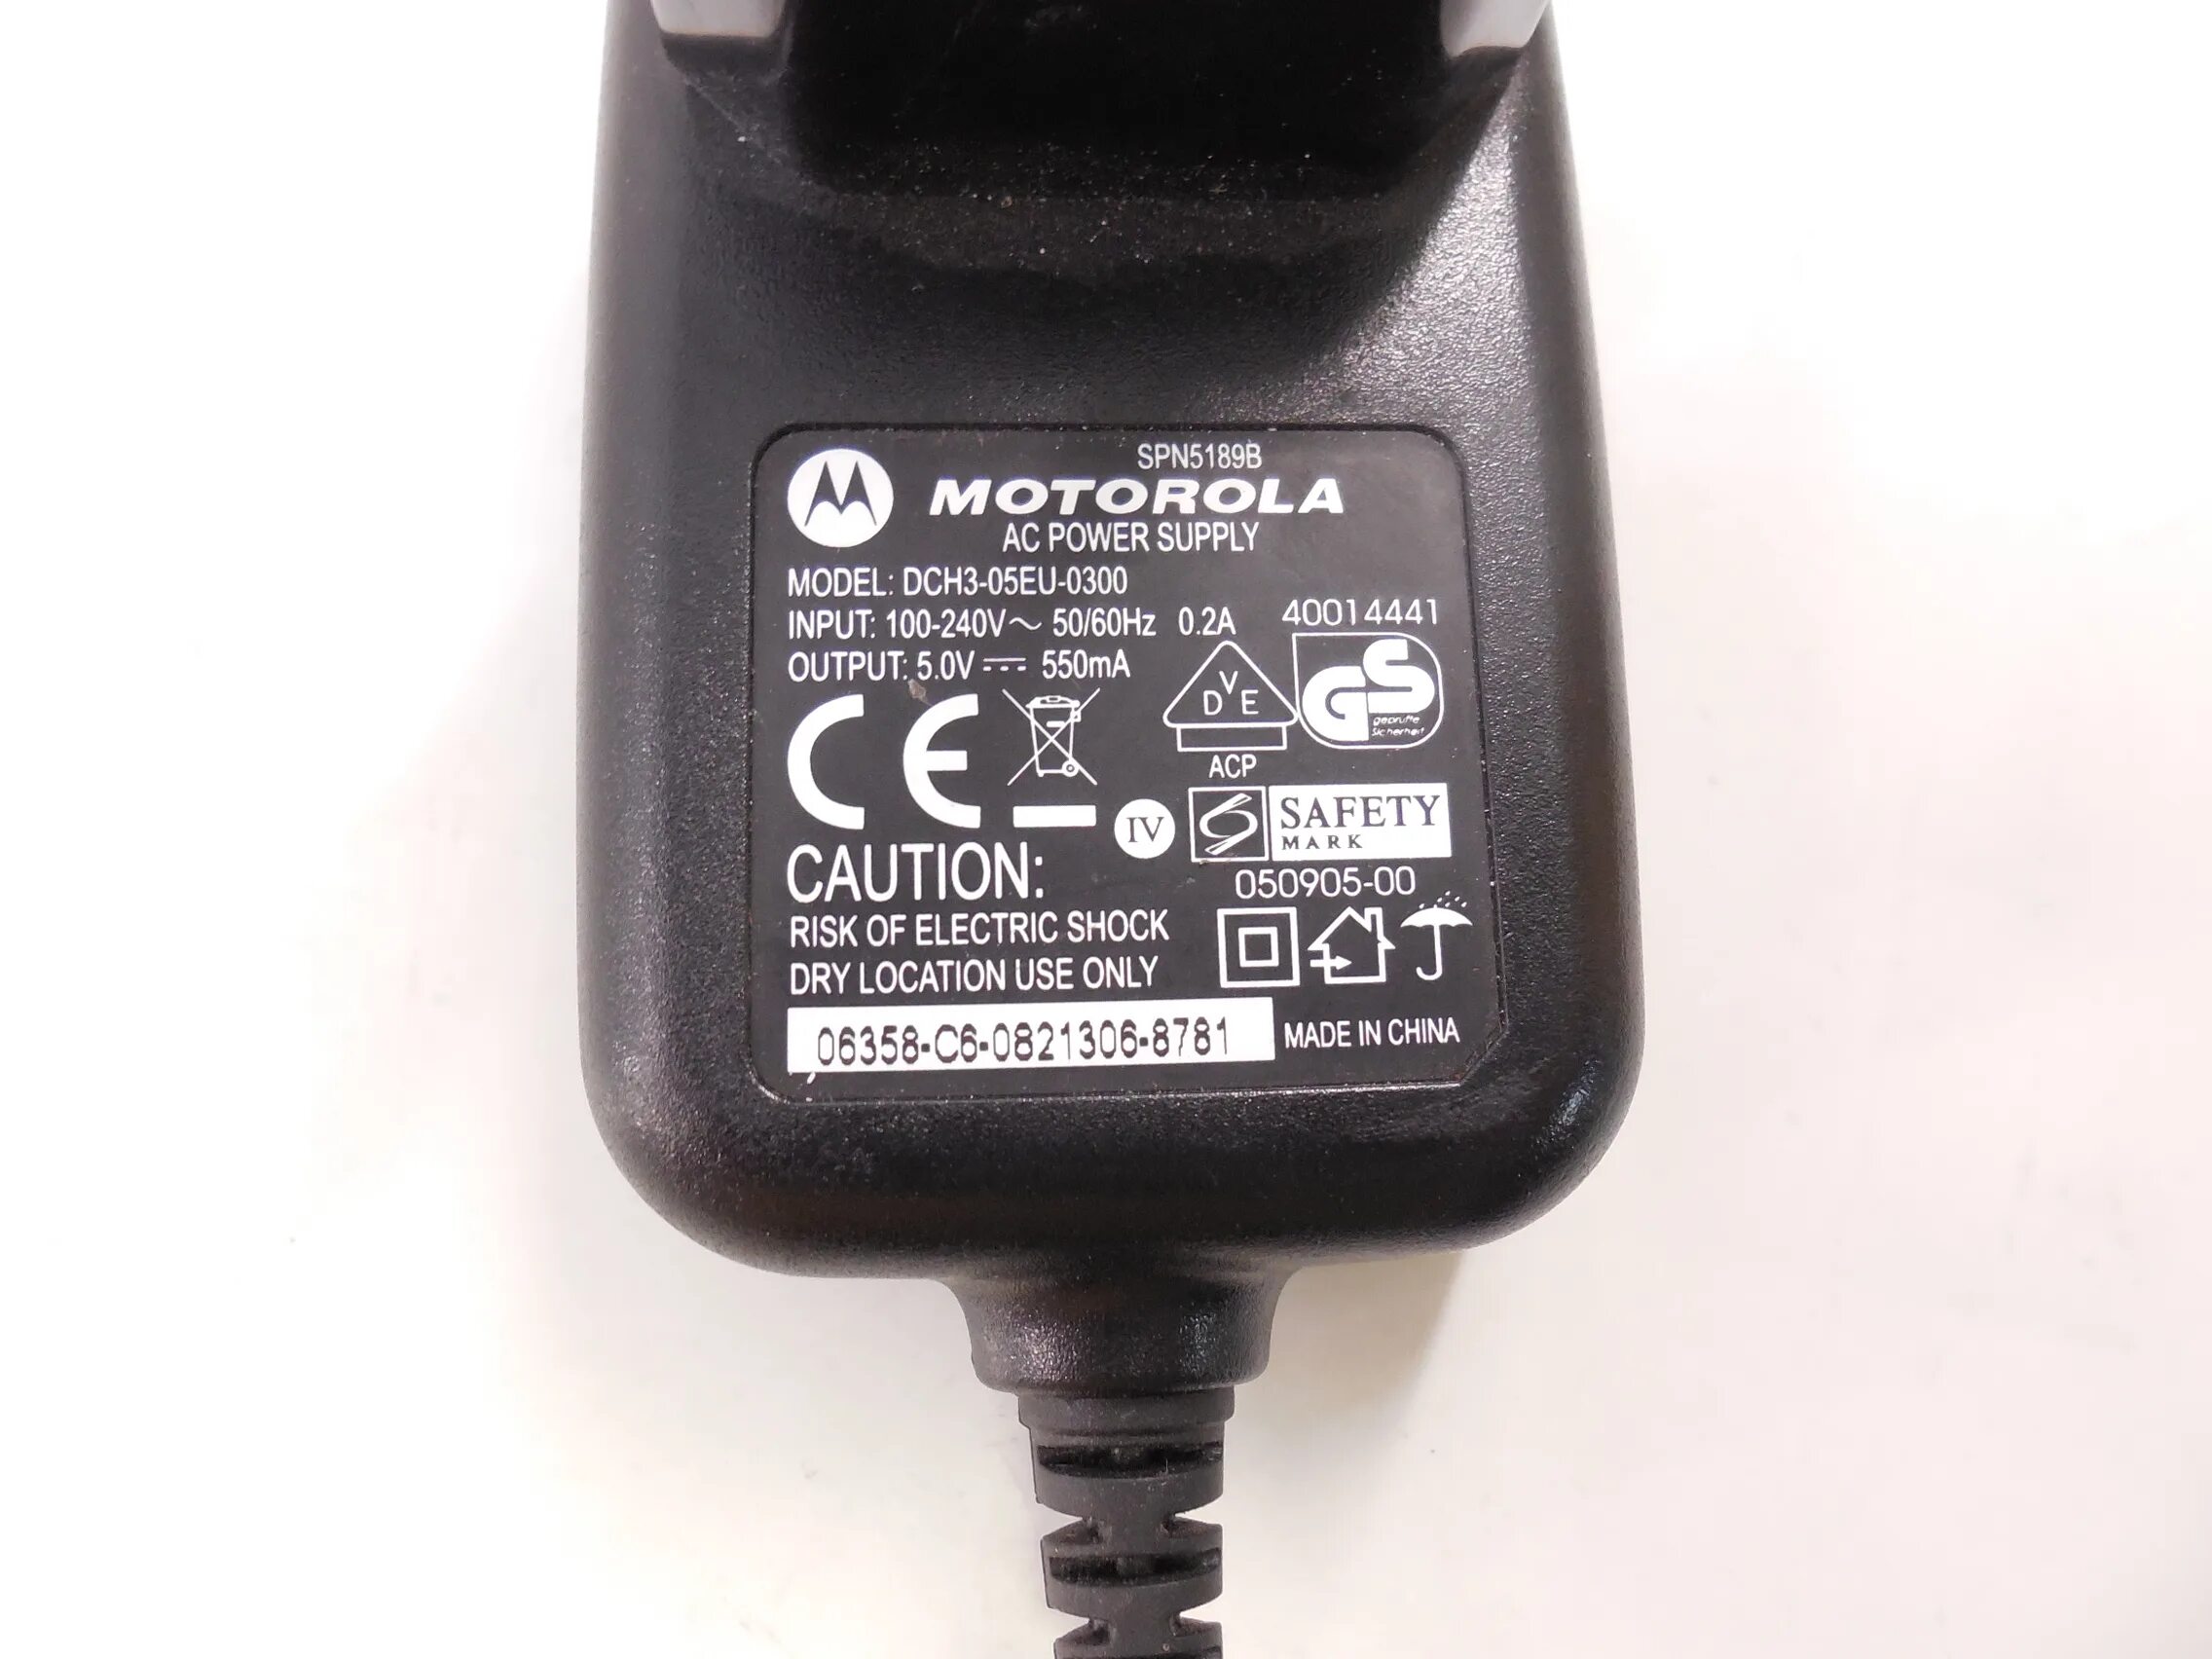 Зарядка 1 ампер. Блок питания Motorola dch3-05eu-0300. Блок питания для рации Моторола GP 2400. Блок питания для Motorola gp300. Блок питания Моторола 12 вольт.